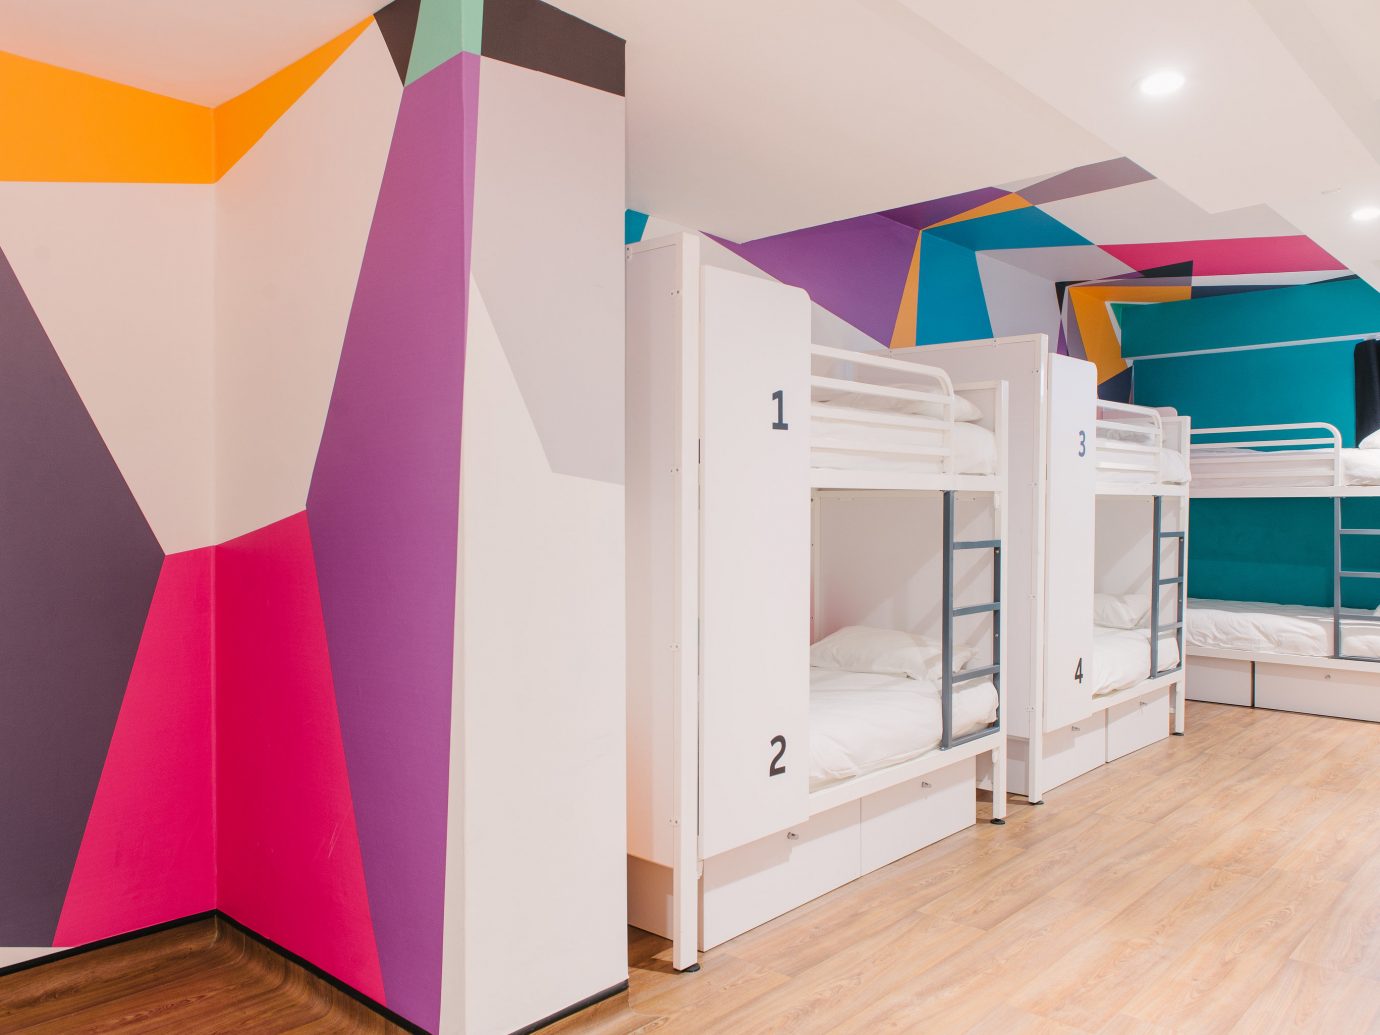 Budget Hotels London floor indoor color room interior design furniture bed home Design colored